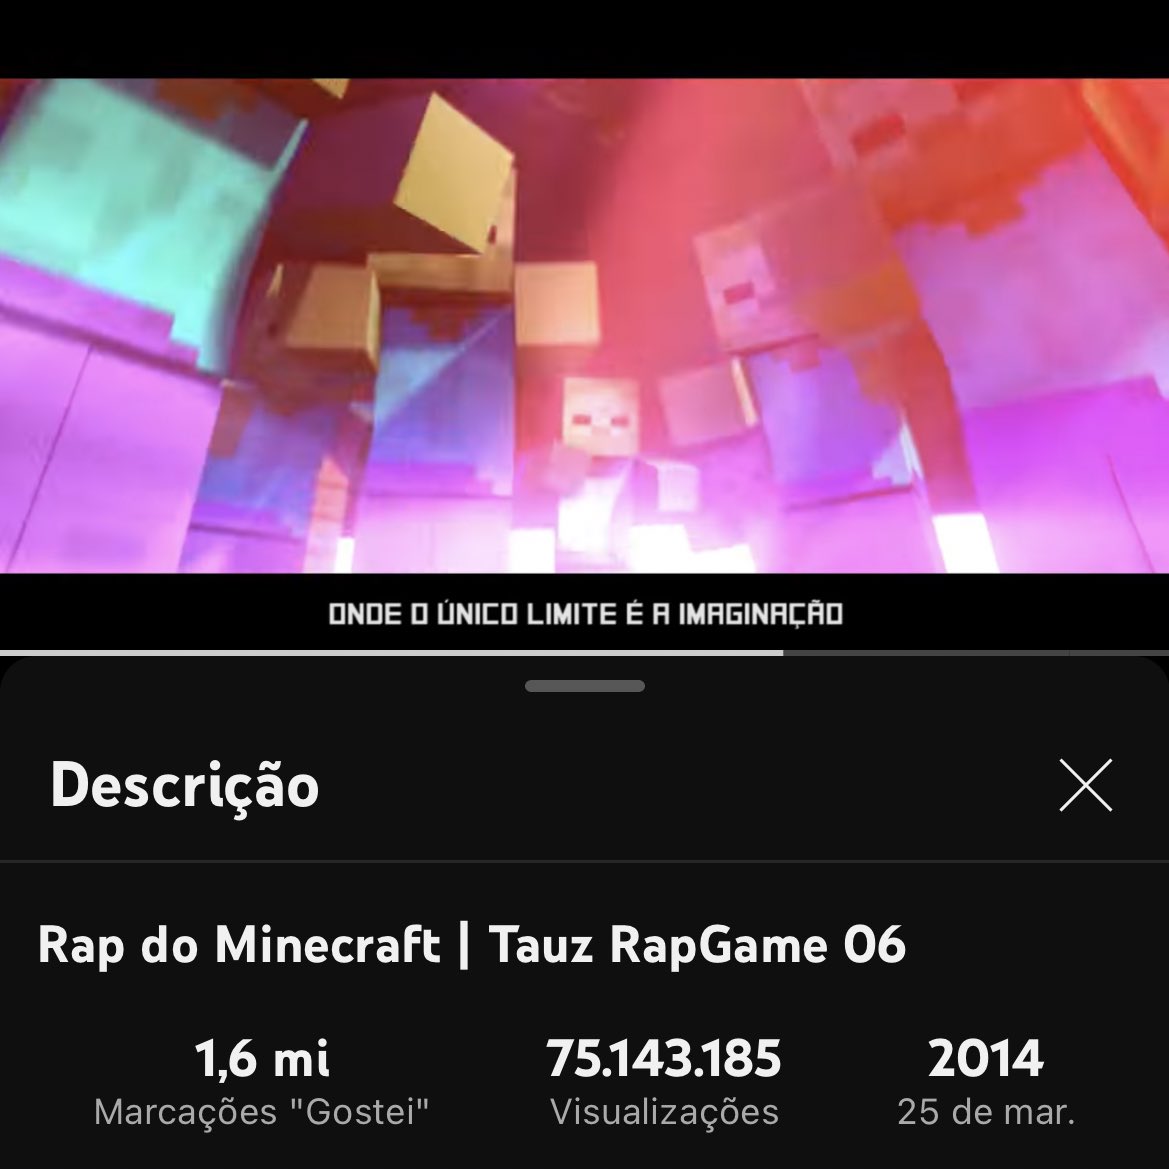 Significado de Rap do Minecraft por Tauz